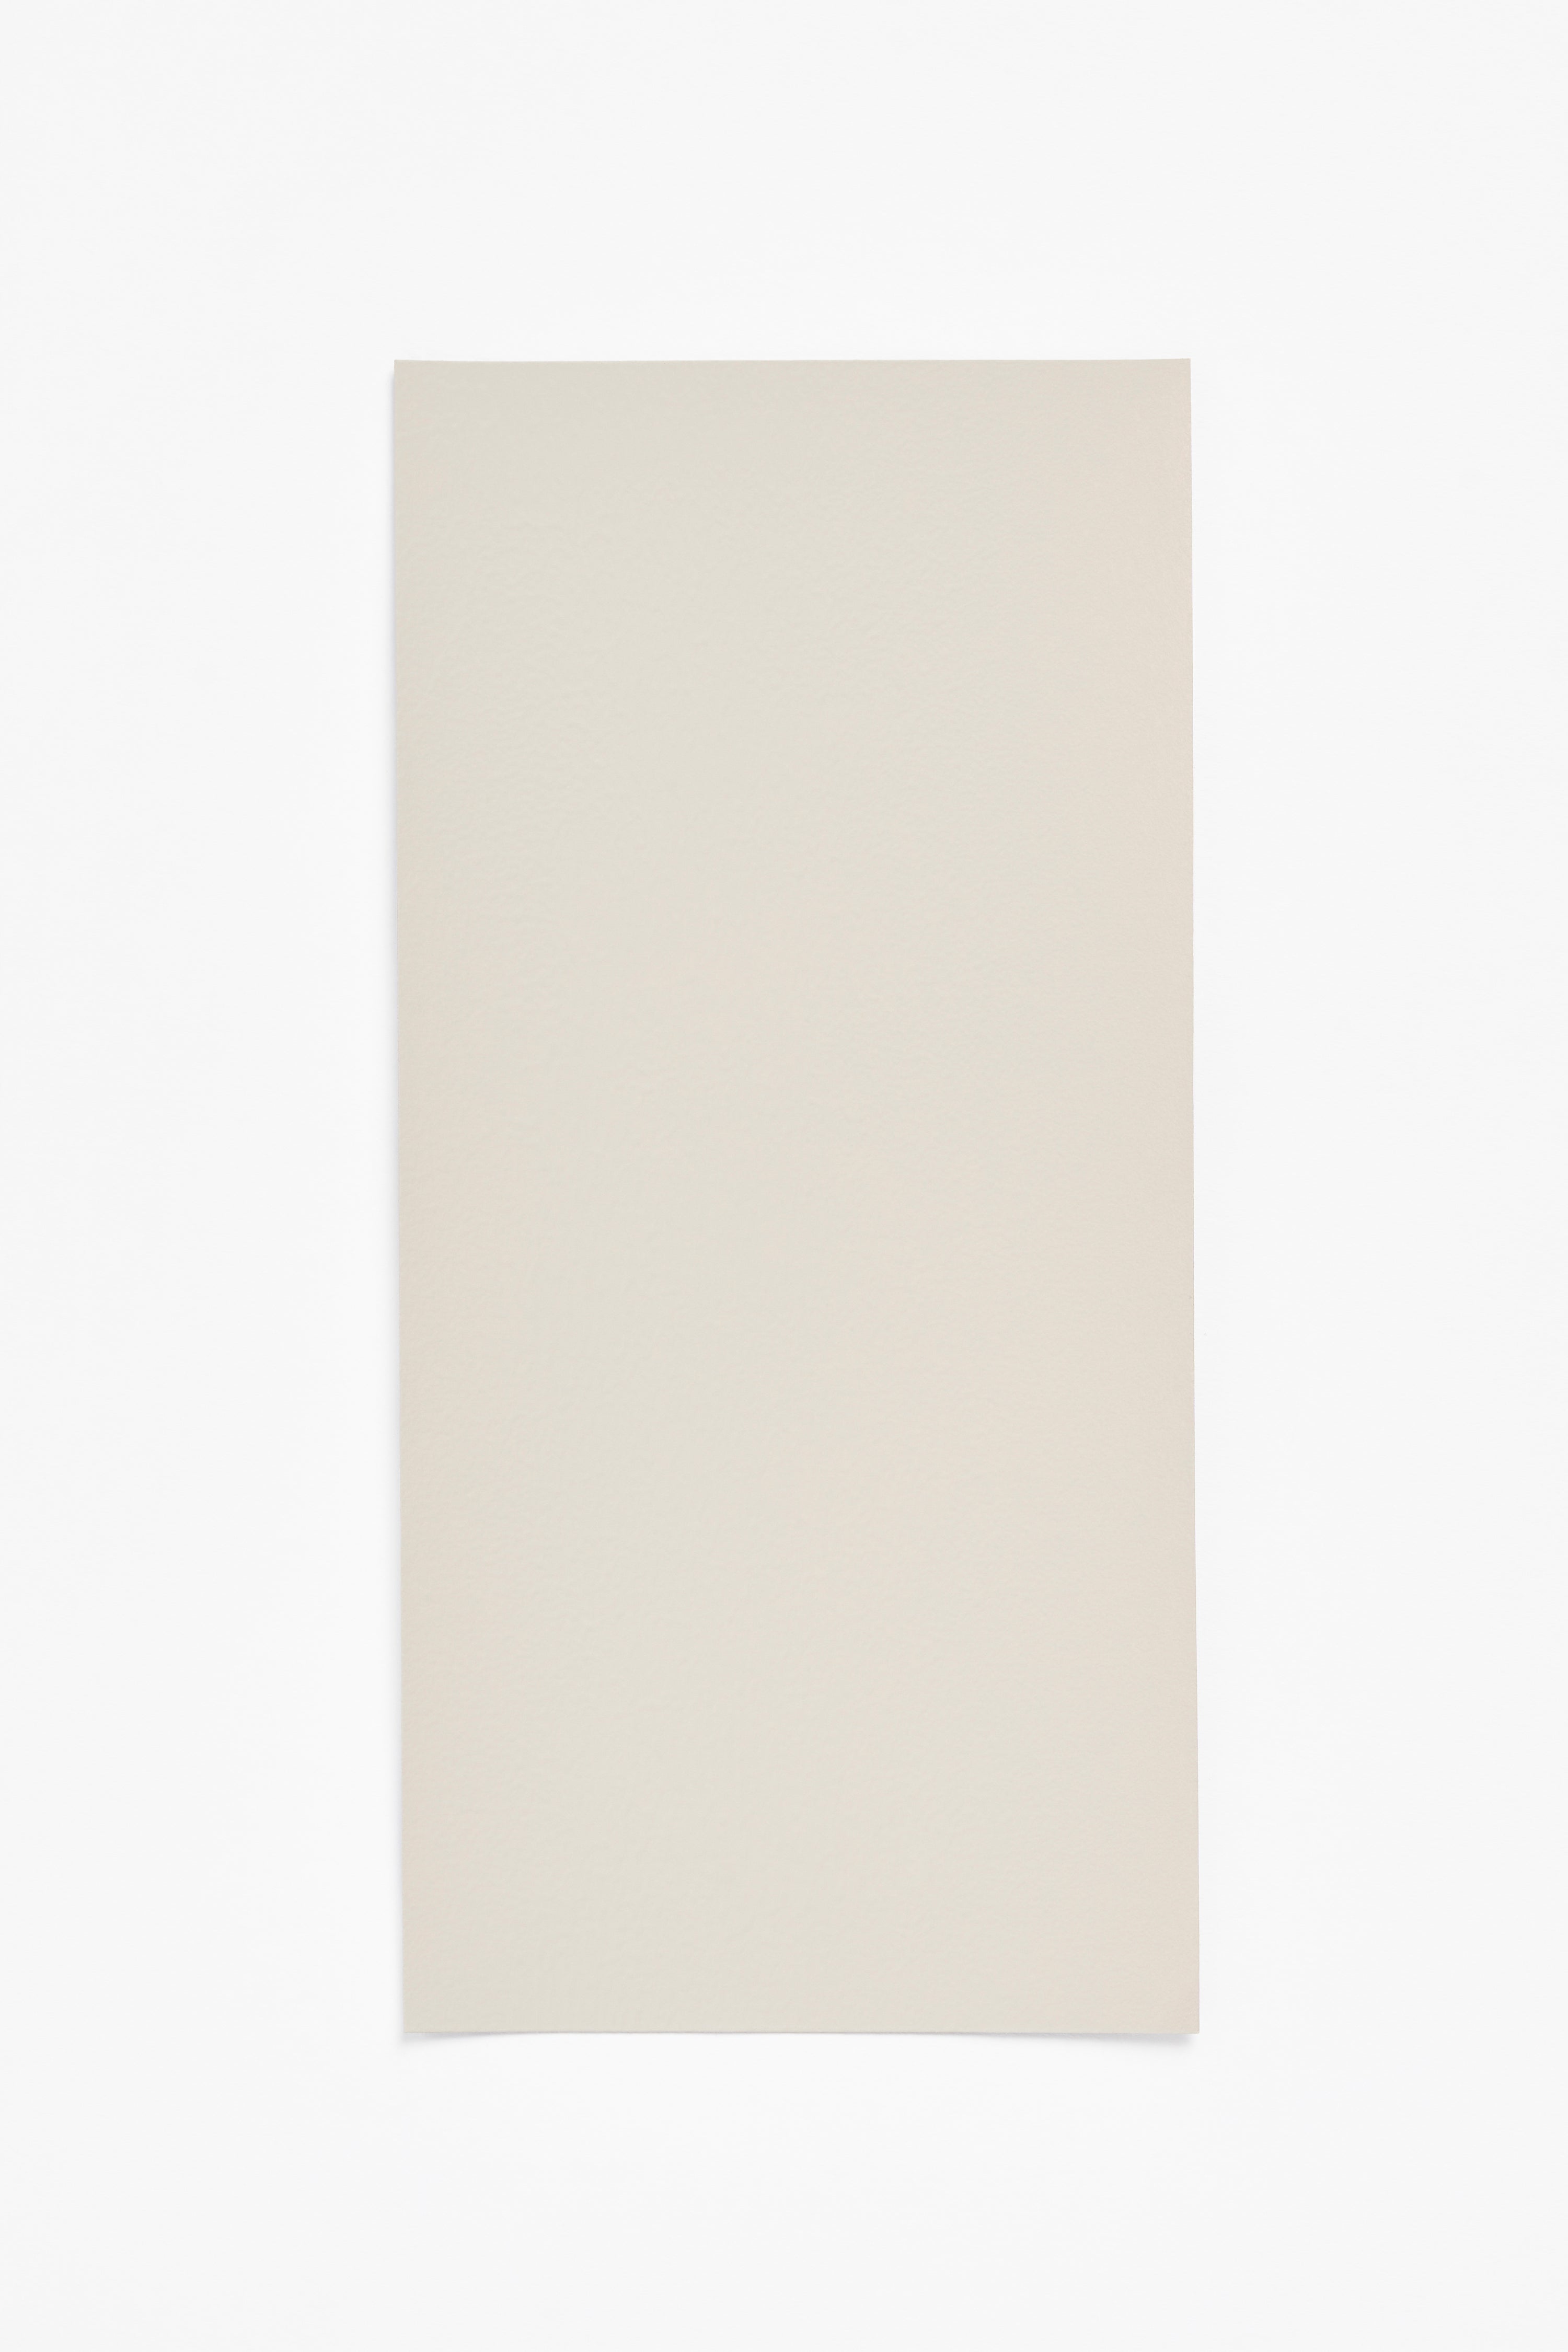 Summer Linen — a paint colour developed by Norm Architects for Blēo